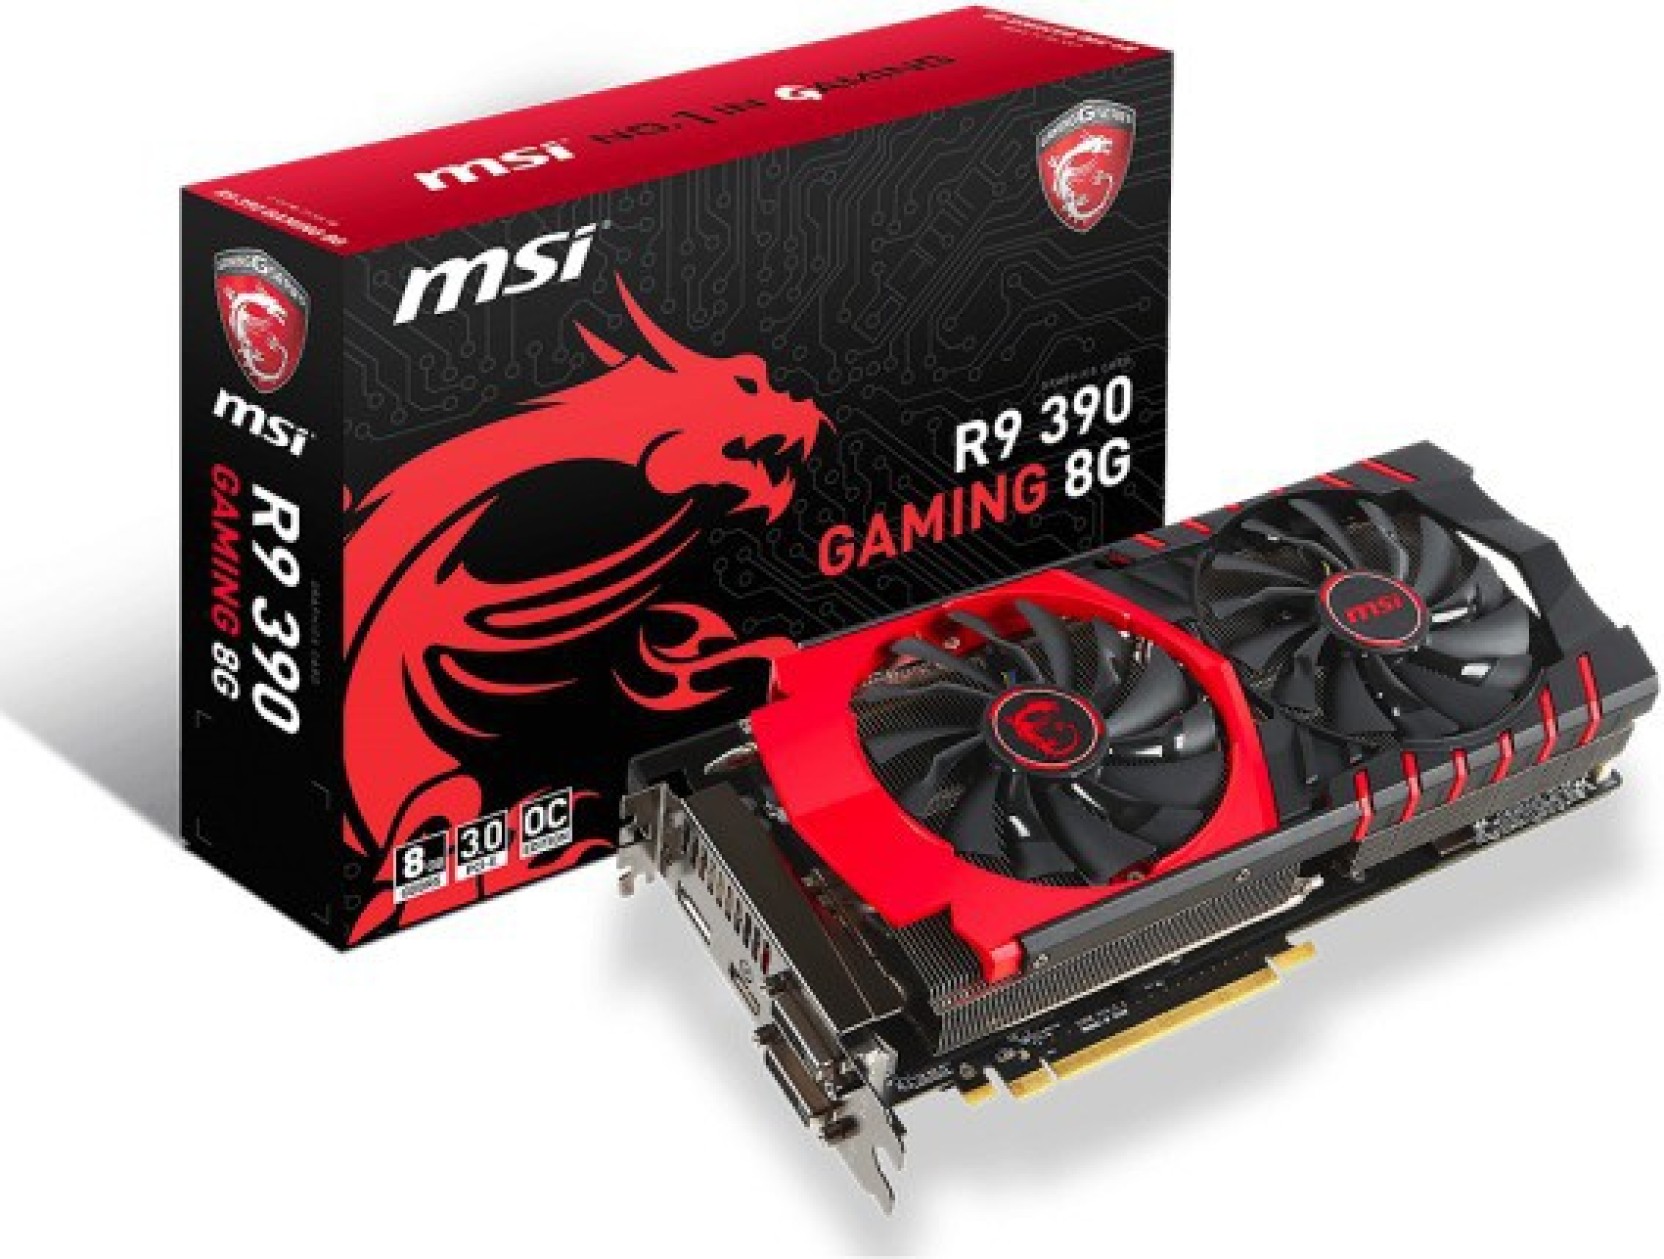 MSI AMD/ATI R9 390 GAMING 8G 6 GB GDDR5 Graphics Card ...